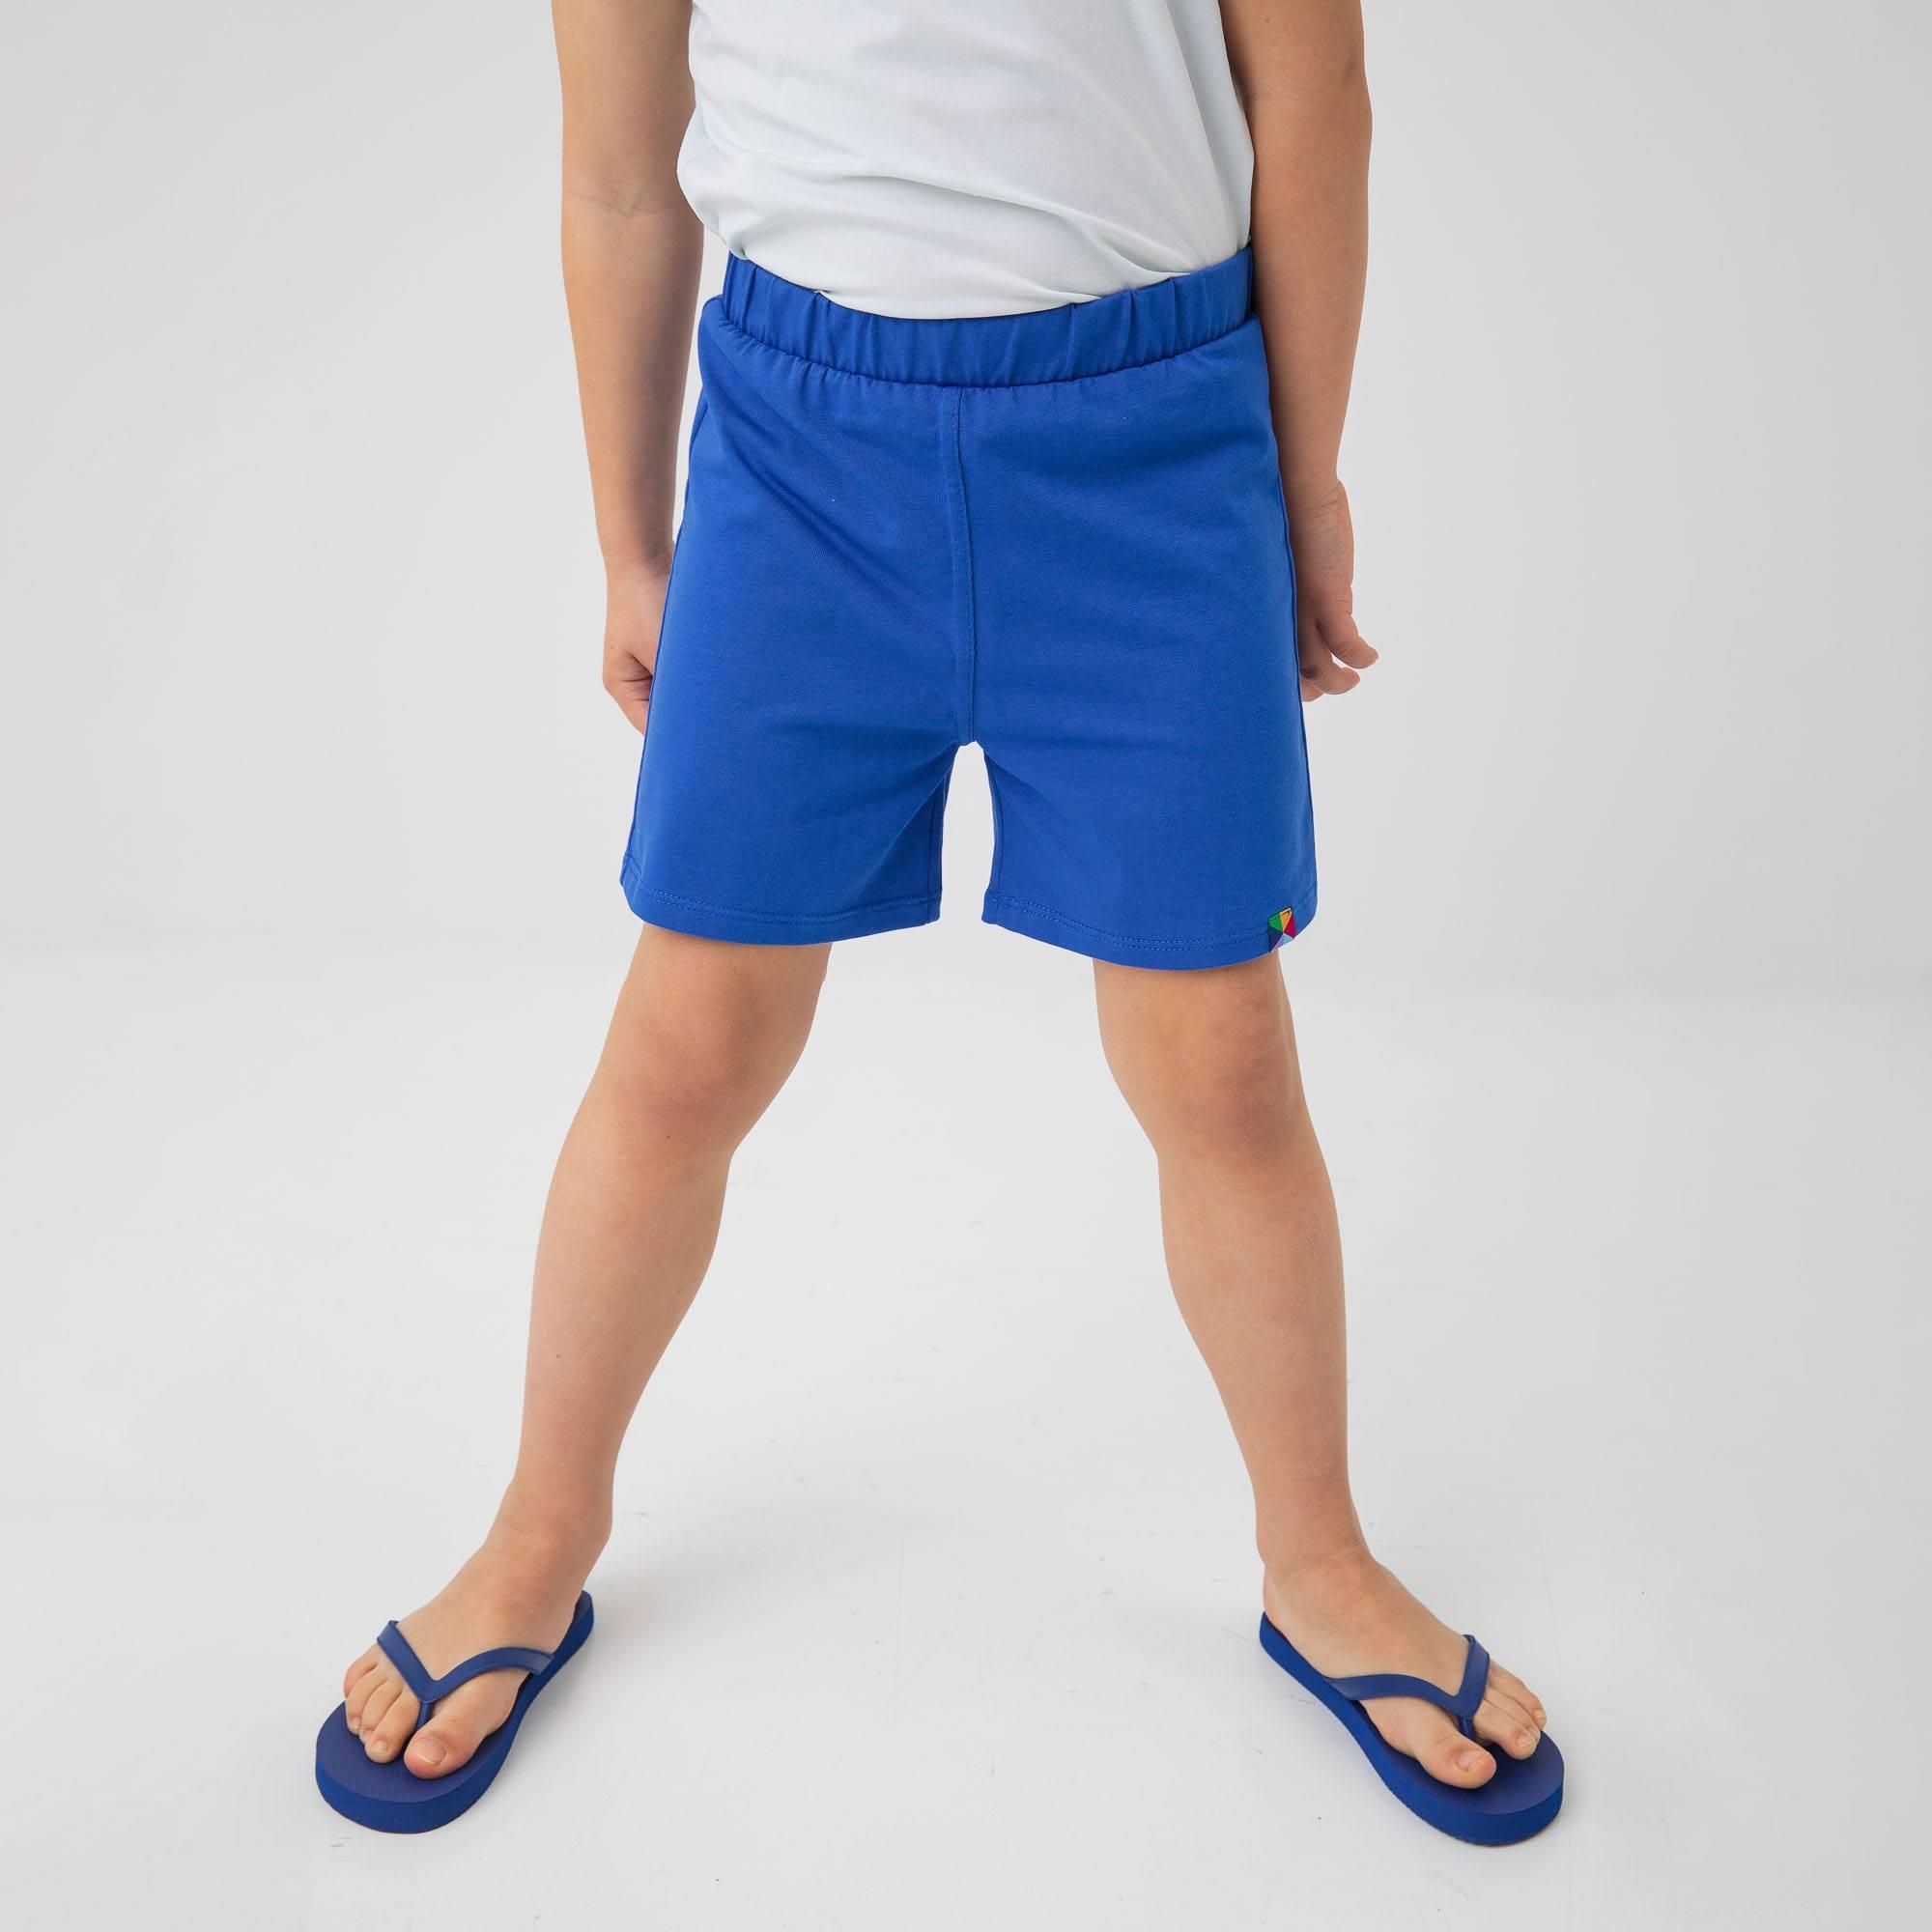 Blue sweat shorts